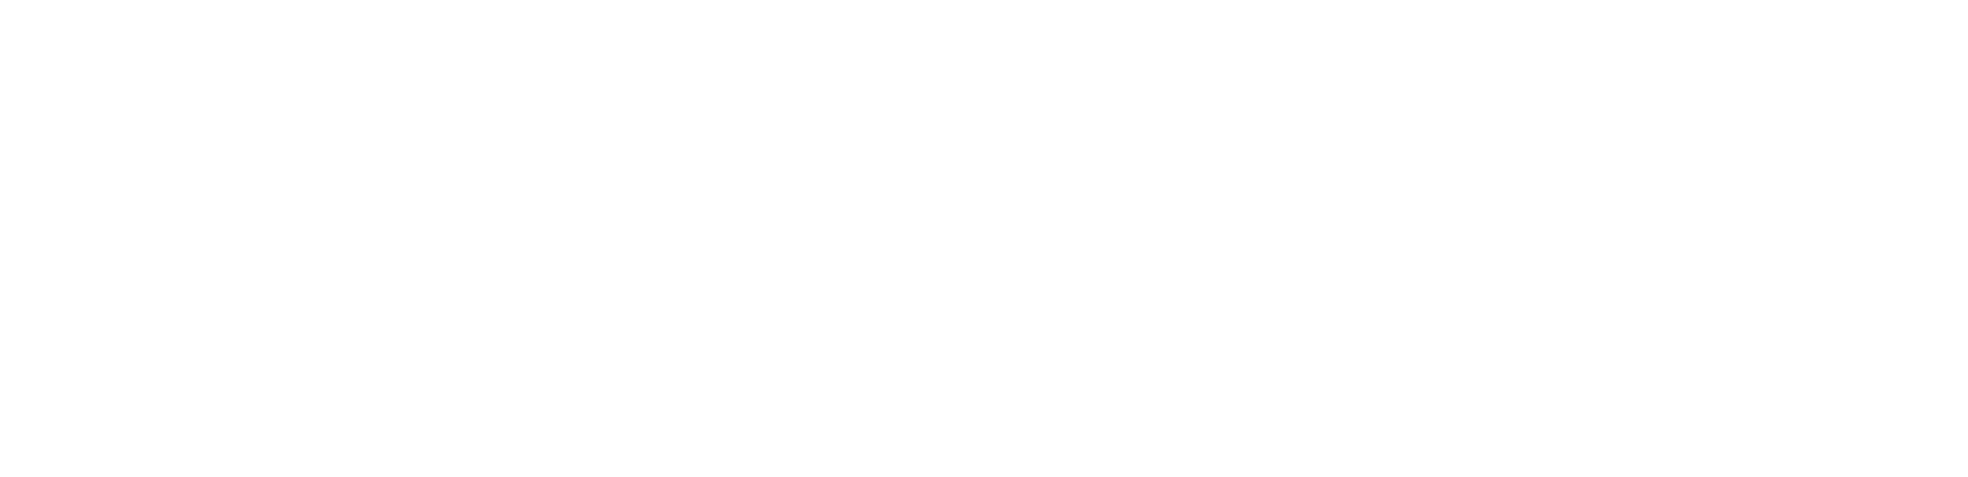 RaiseRight logo